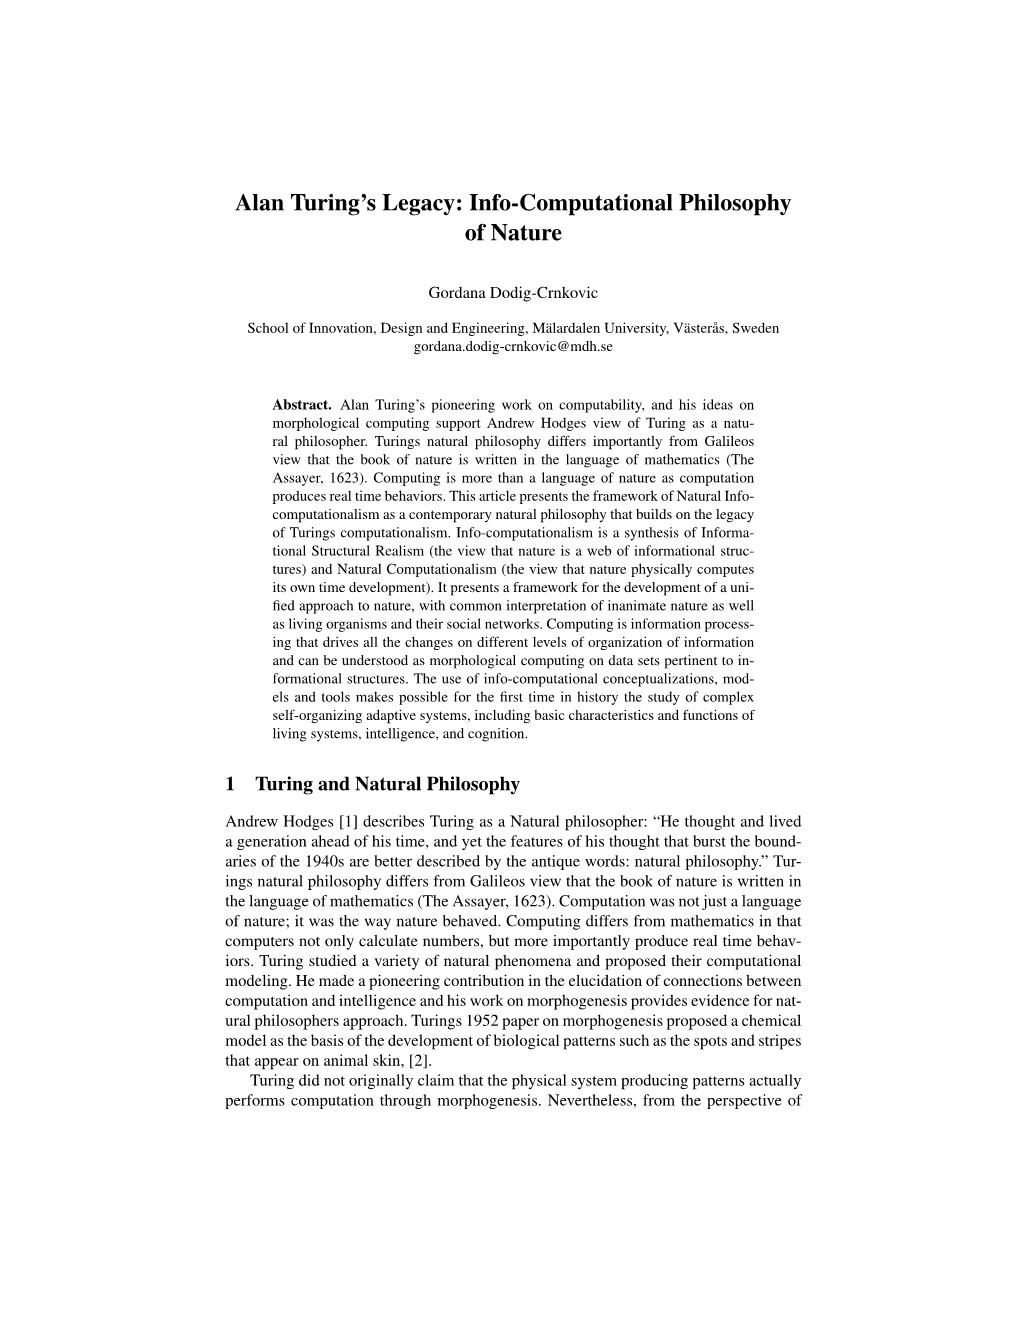 Alan Turing's Legacy: Info-Computational Philosophy Of